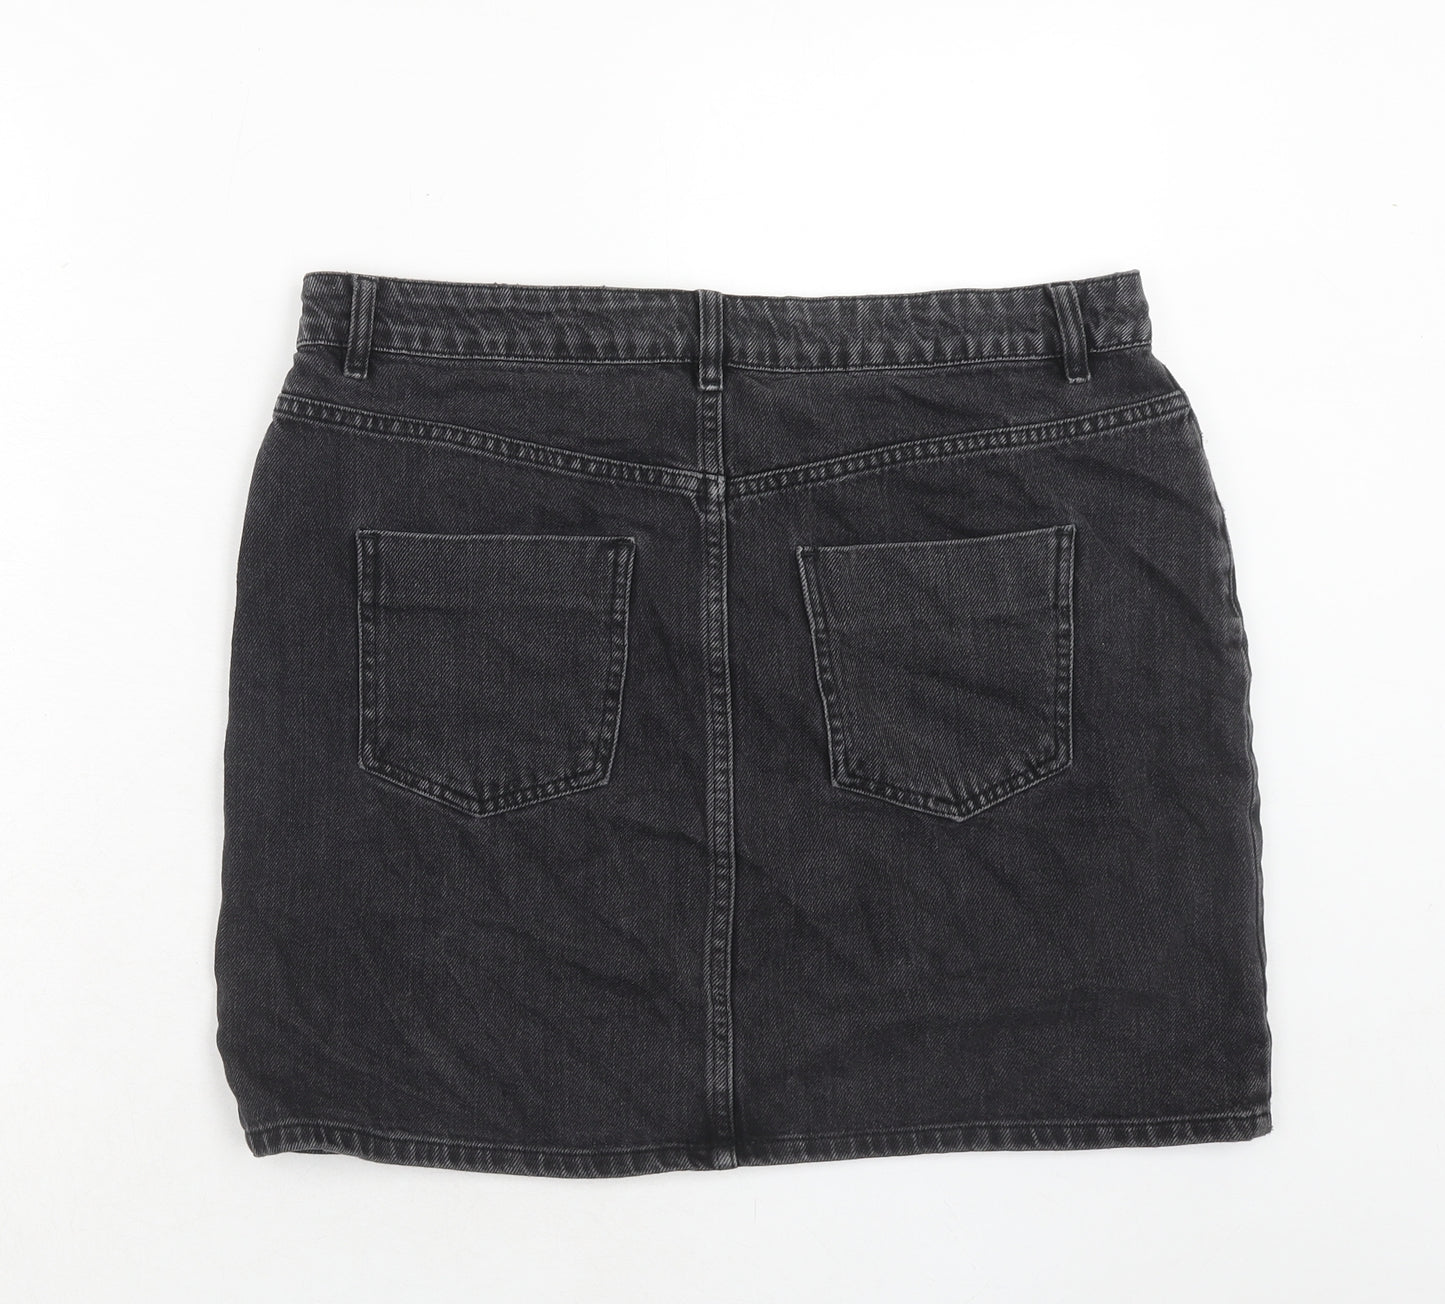 ASOS Womens Black Cotton A-Line Skirt Size 16 Zip